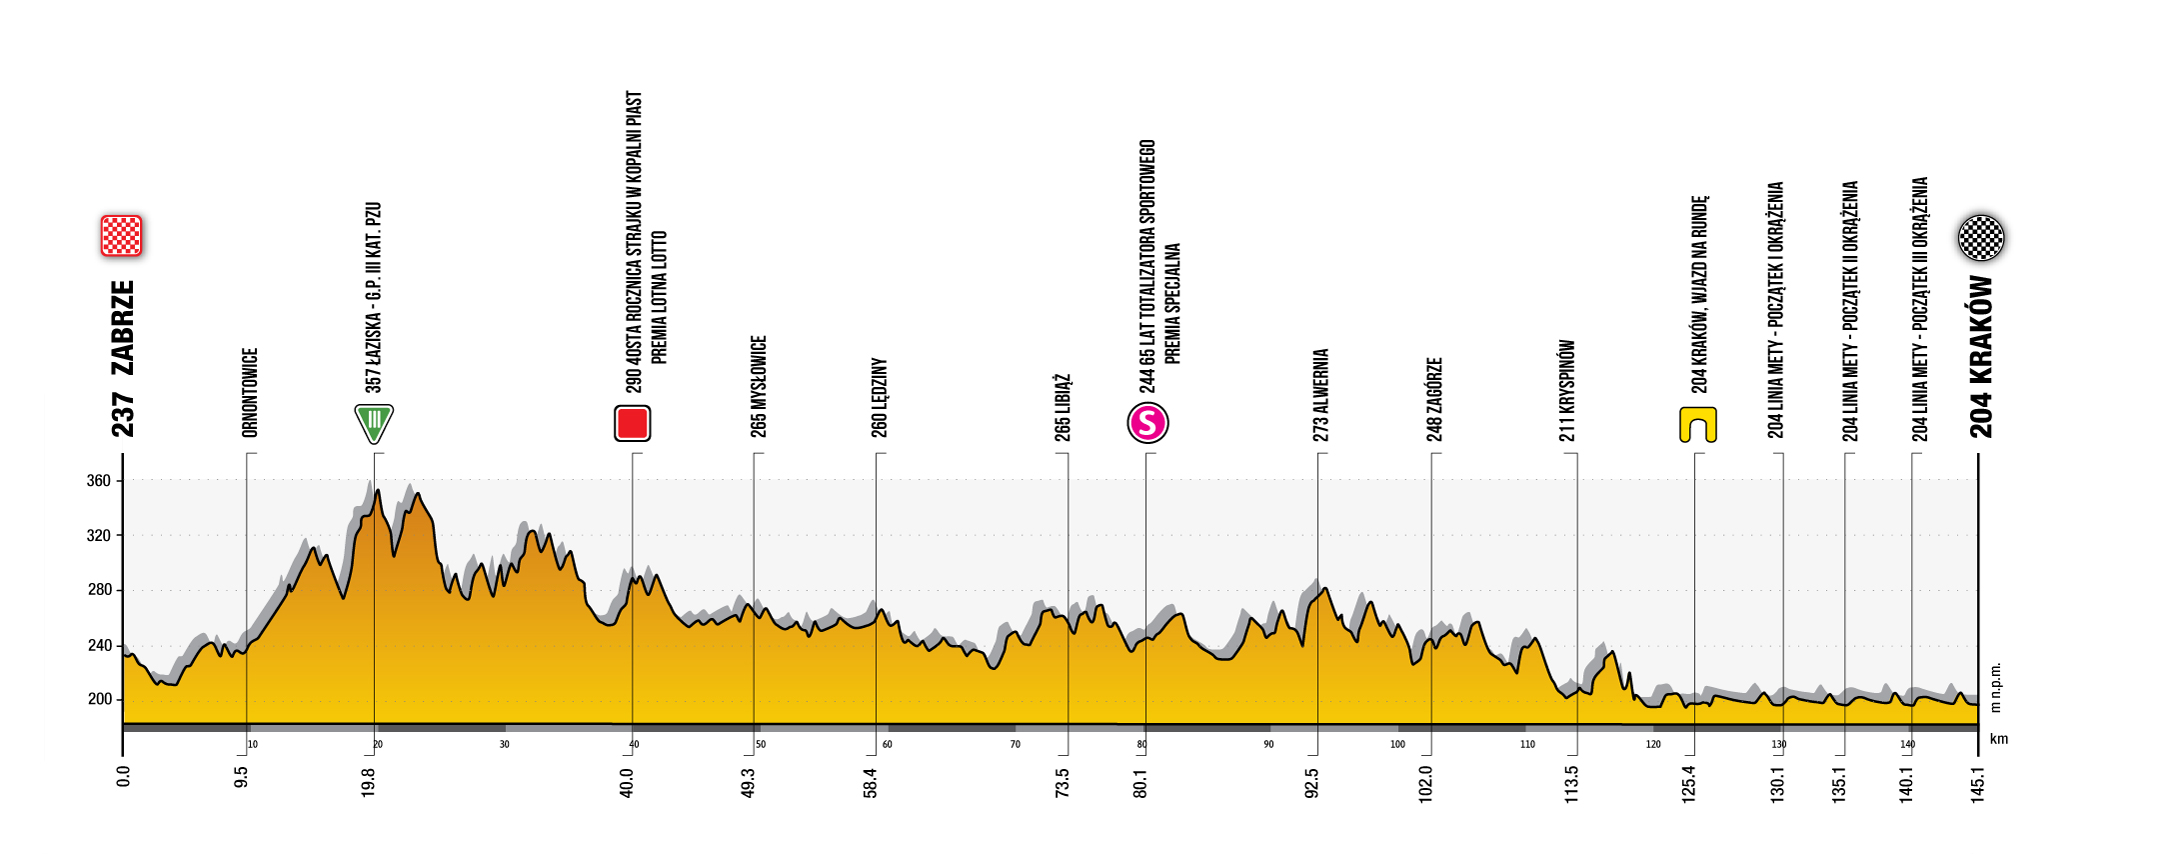 Tour de Pologne 2021: etap 7 - przekroje/mapki - Rowery.org